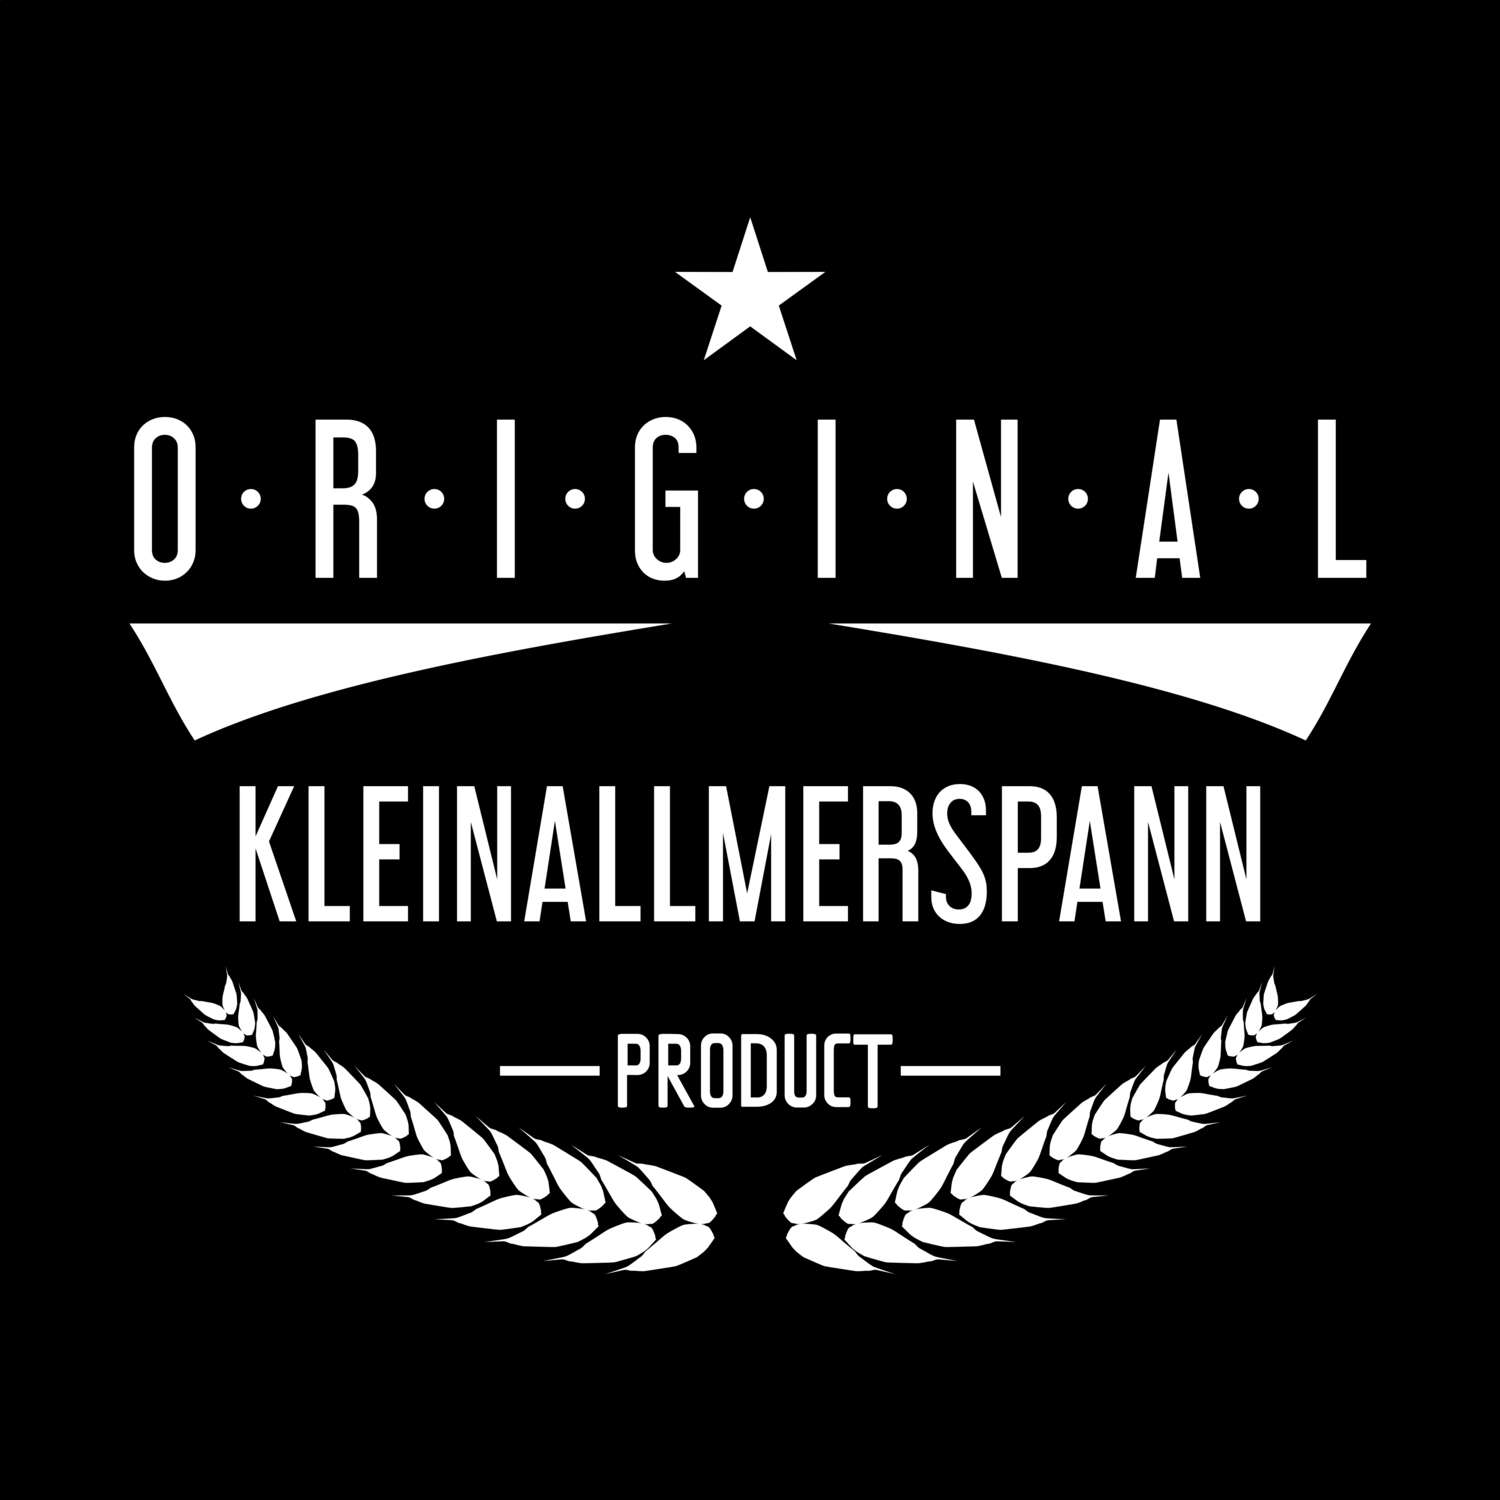 Kleinallmerspann T-Shirt »Original Product«